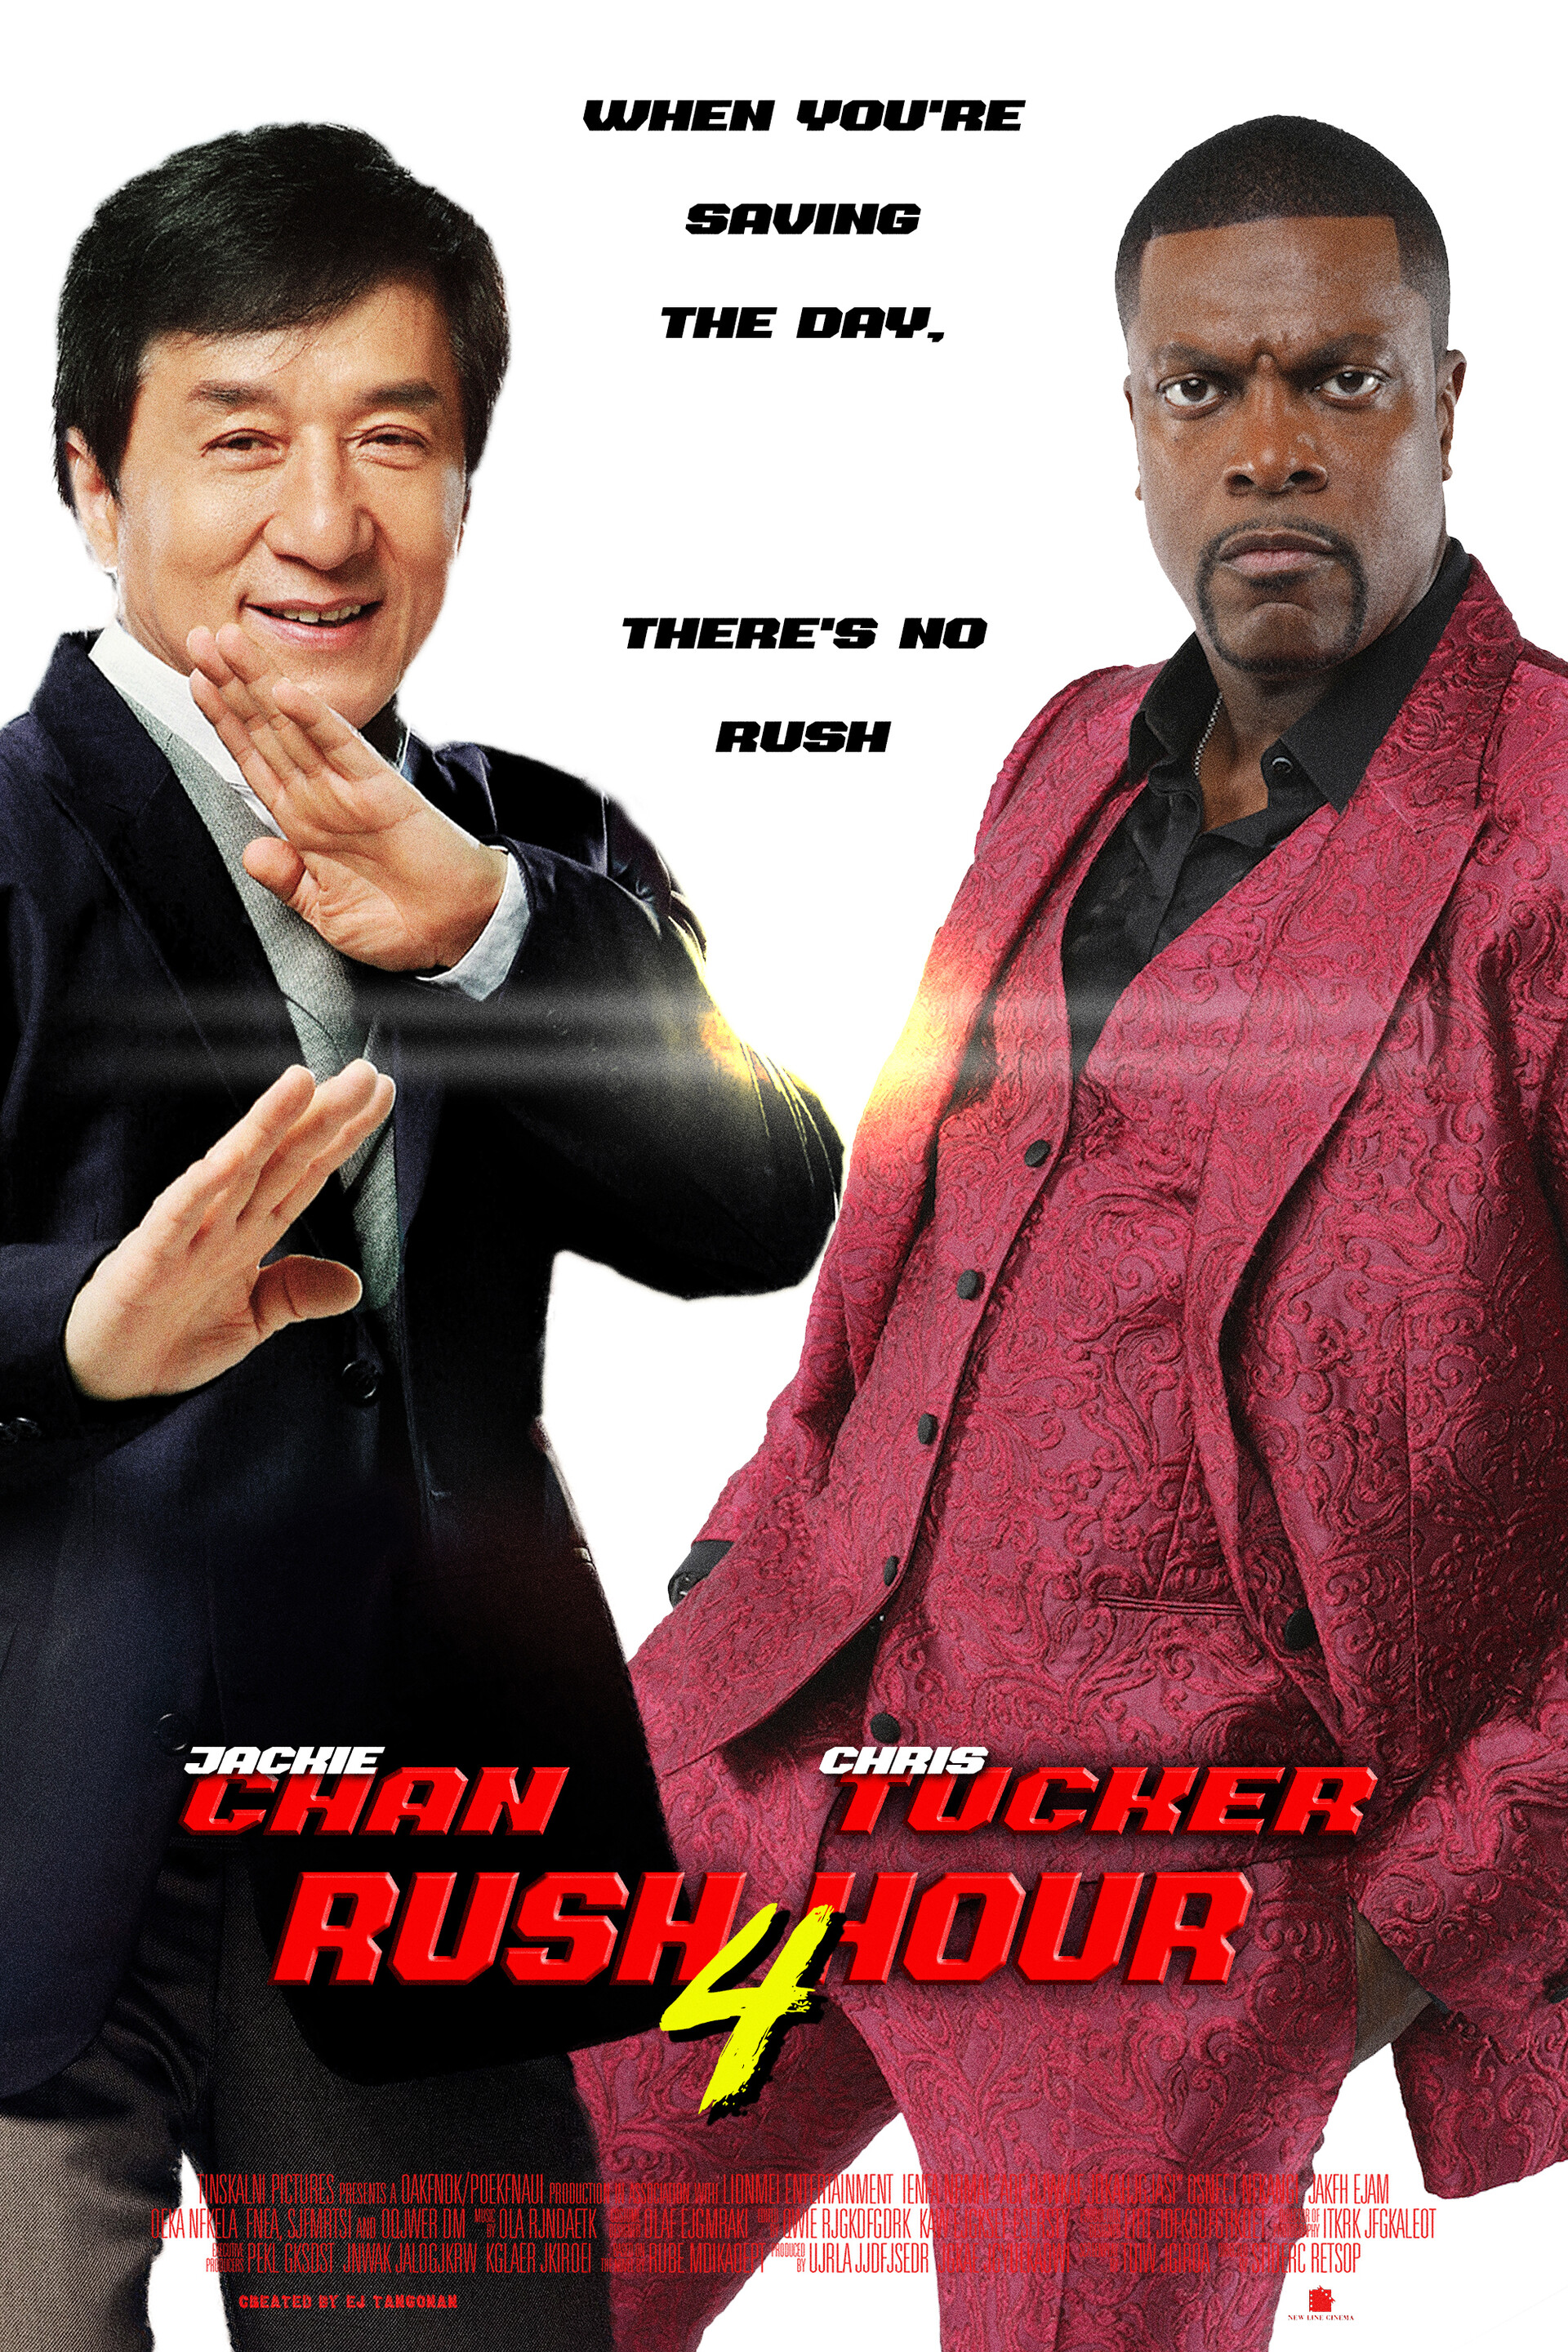 rush hour movie poster